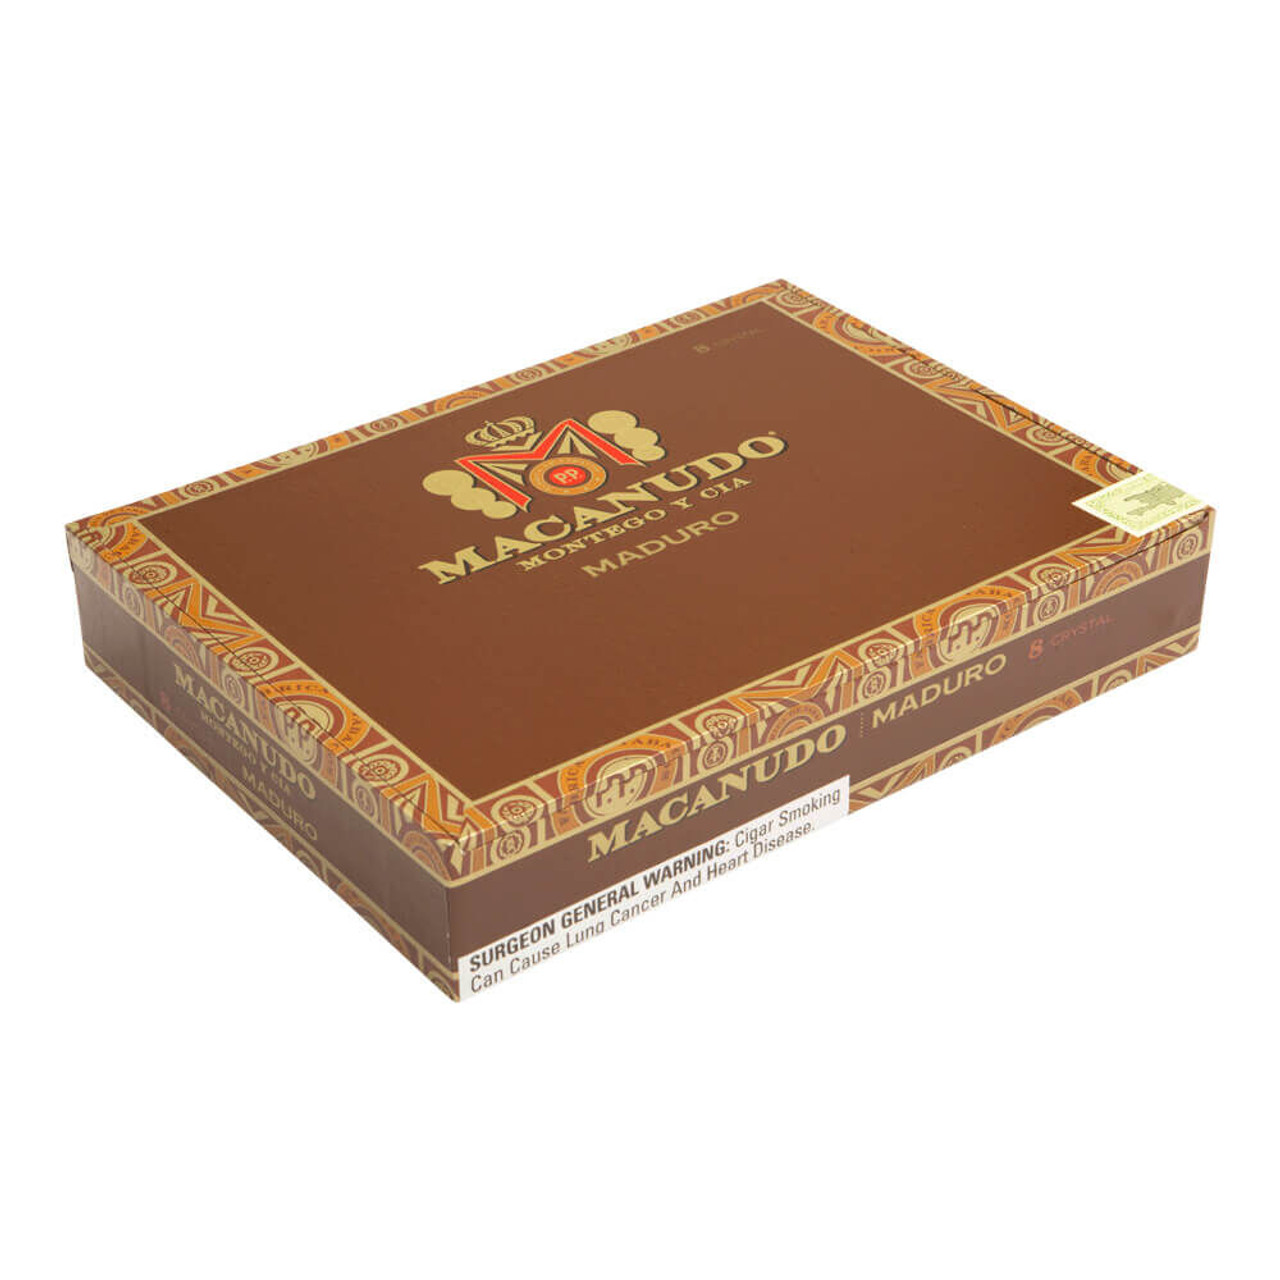 Macanudo Maduro Crystal Cigars - 5.5 x 50 (Box of 8 Glass Tubes) *Box